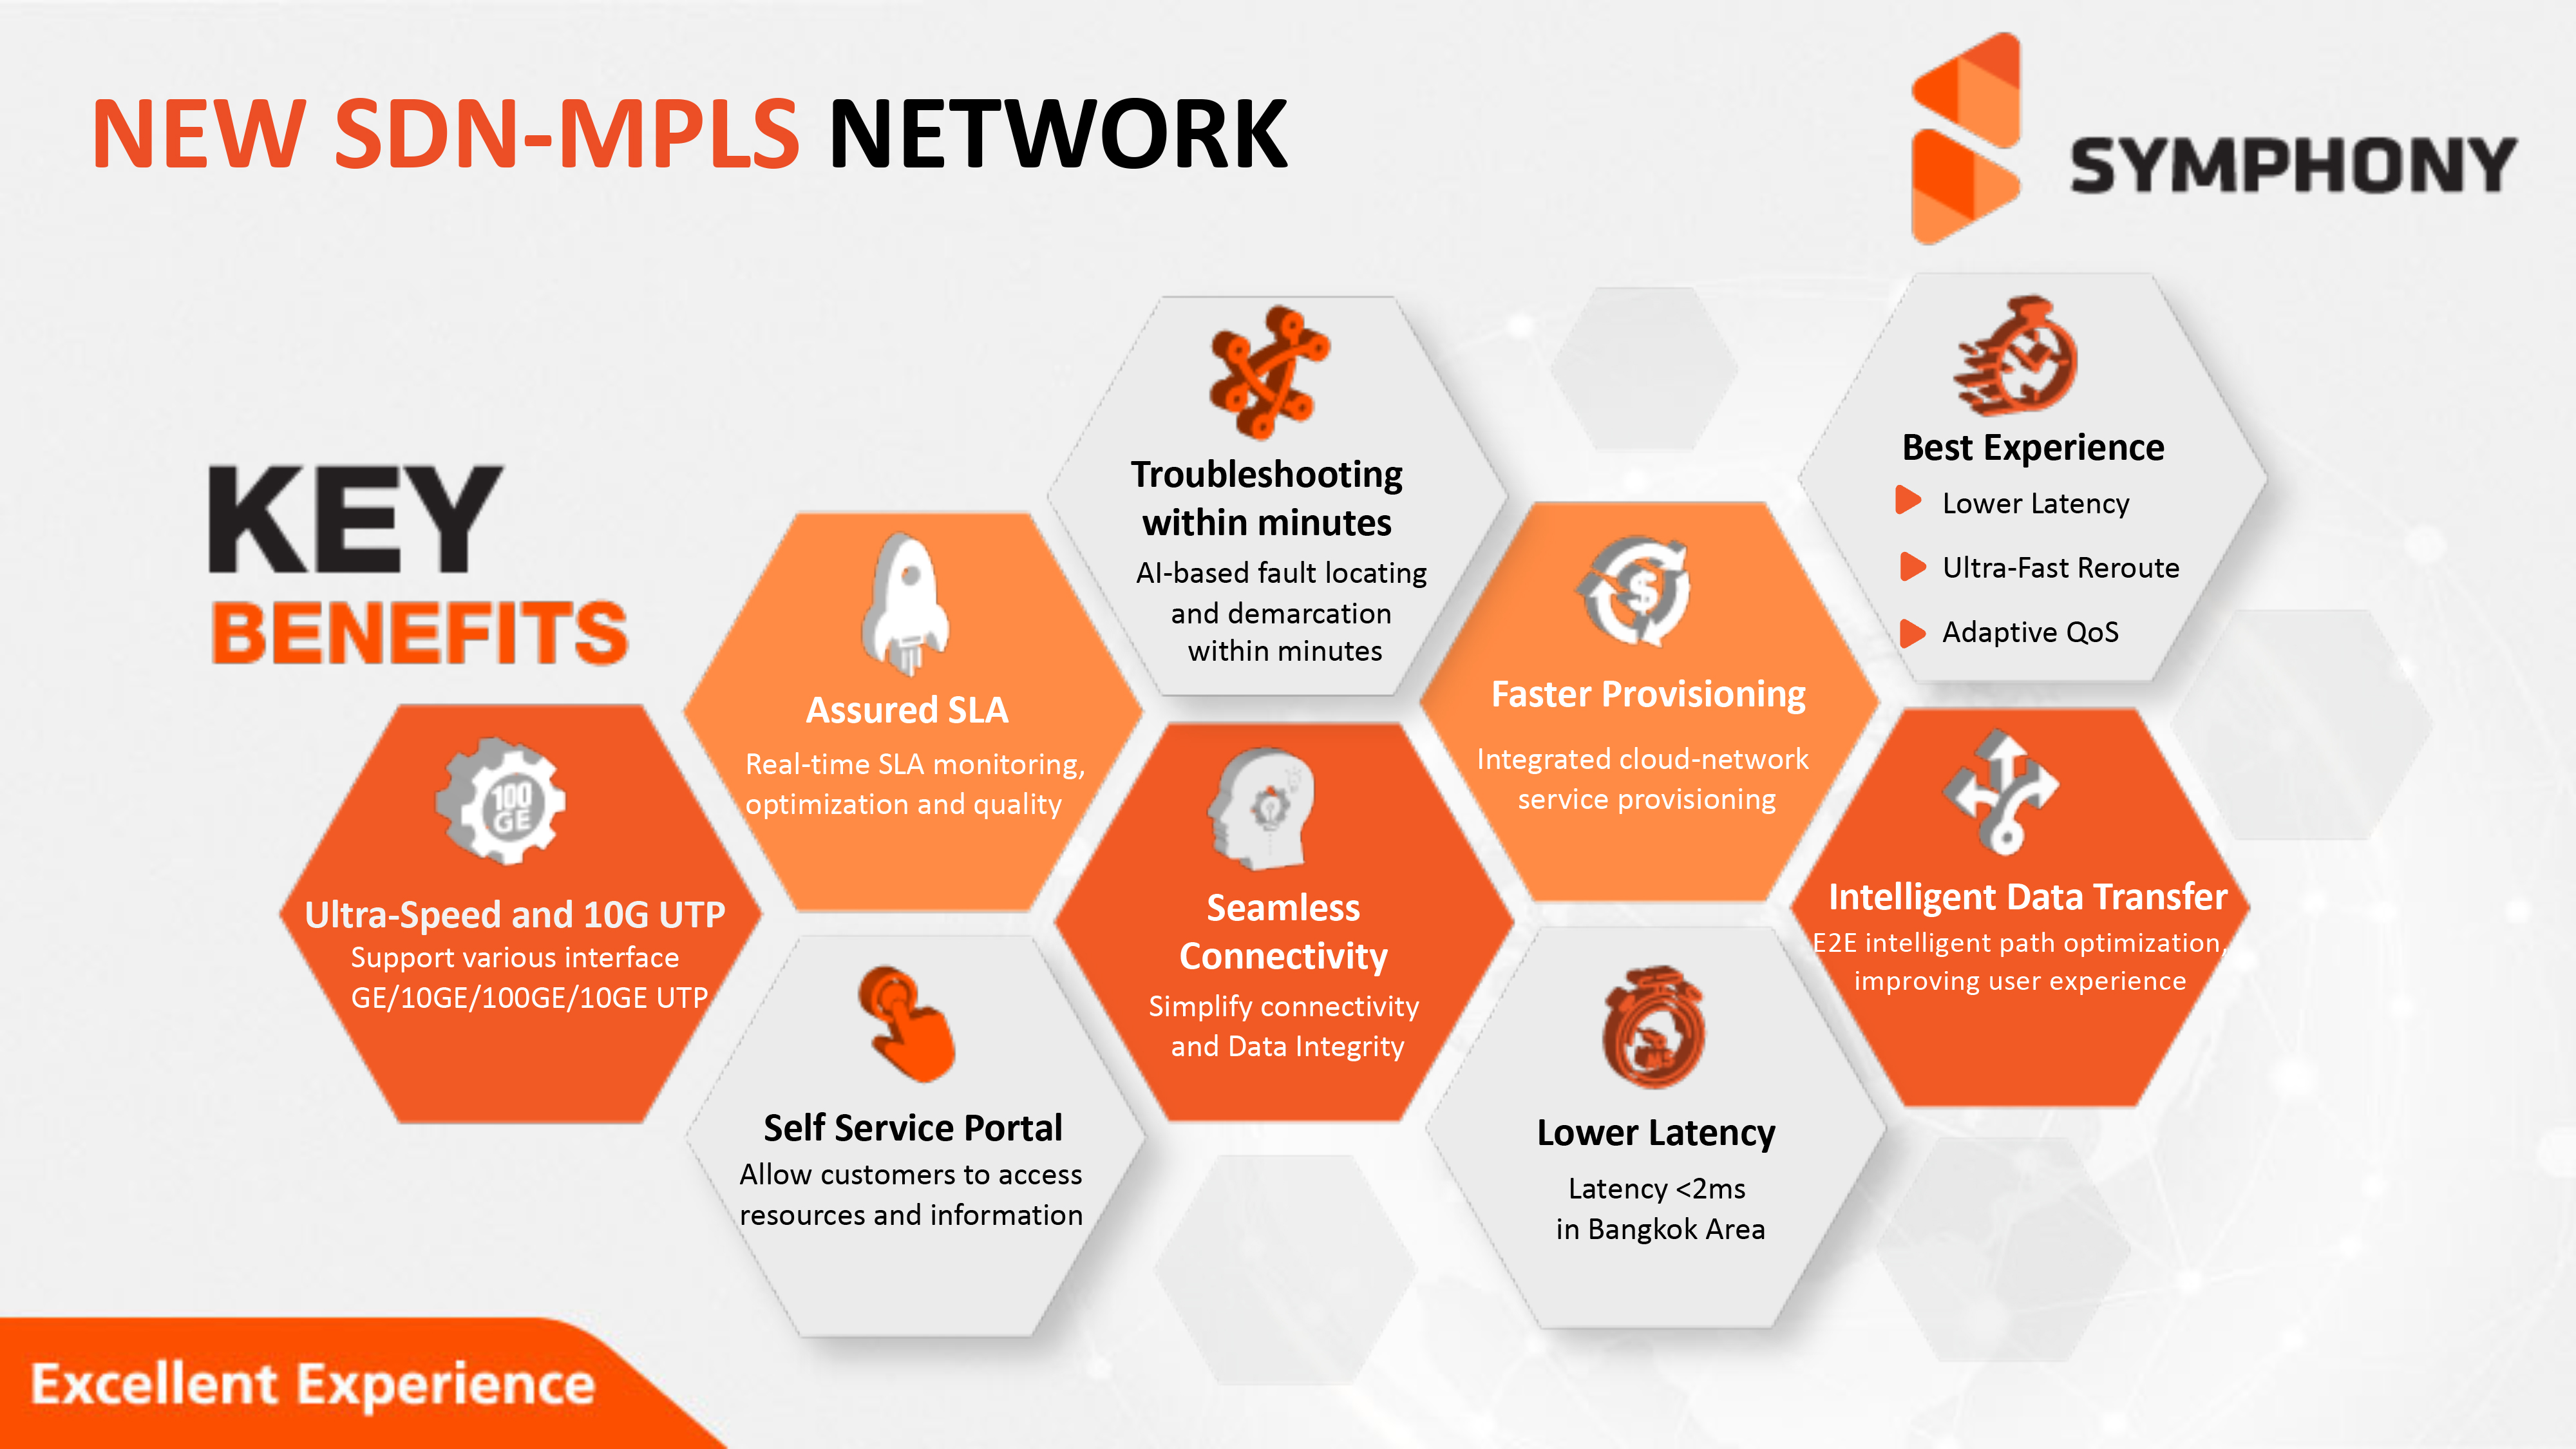 SYMPHONY-news-SDN-MPLS-network-KeyBenefits